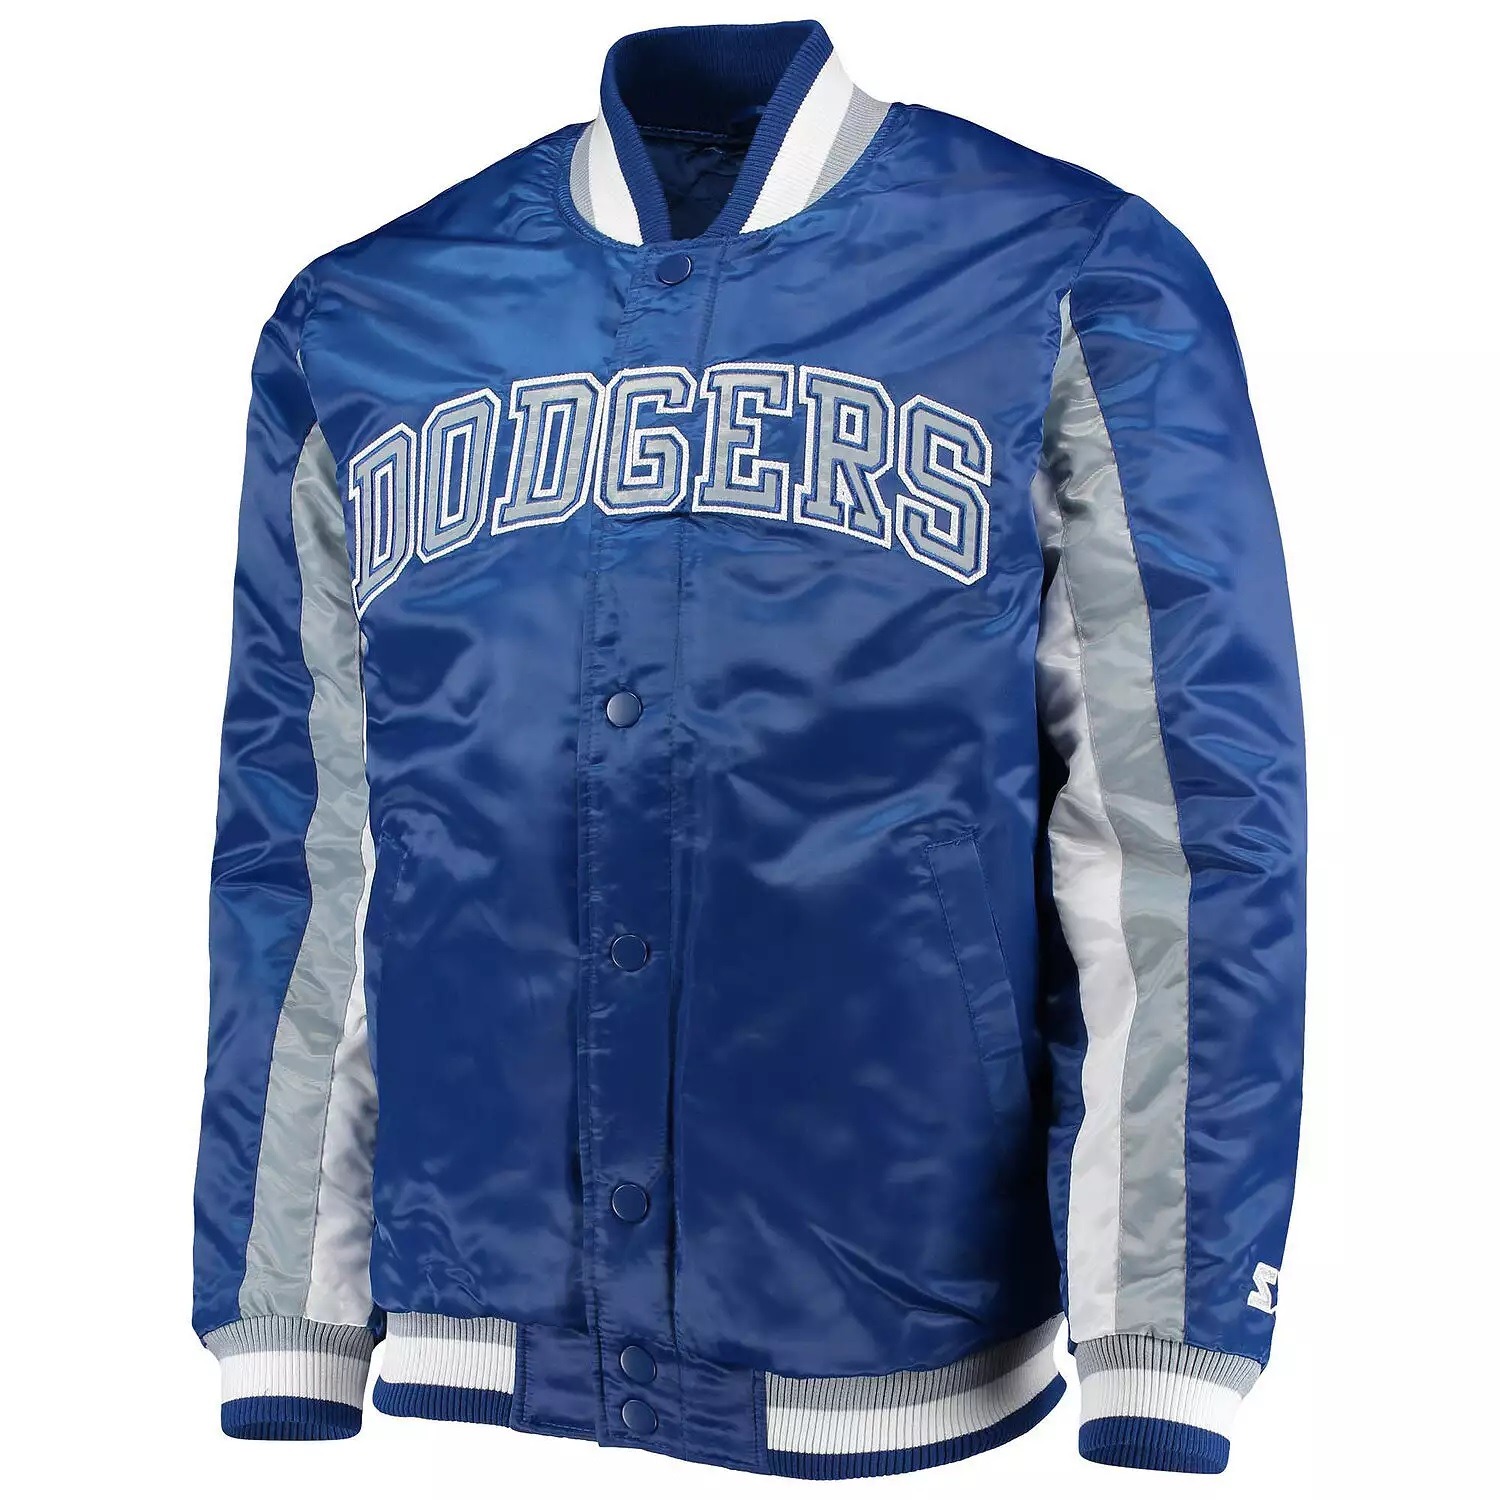 The Ace Dodgers Royal Blue Satin Varsity Jacket